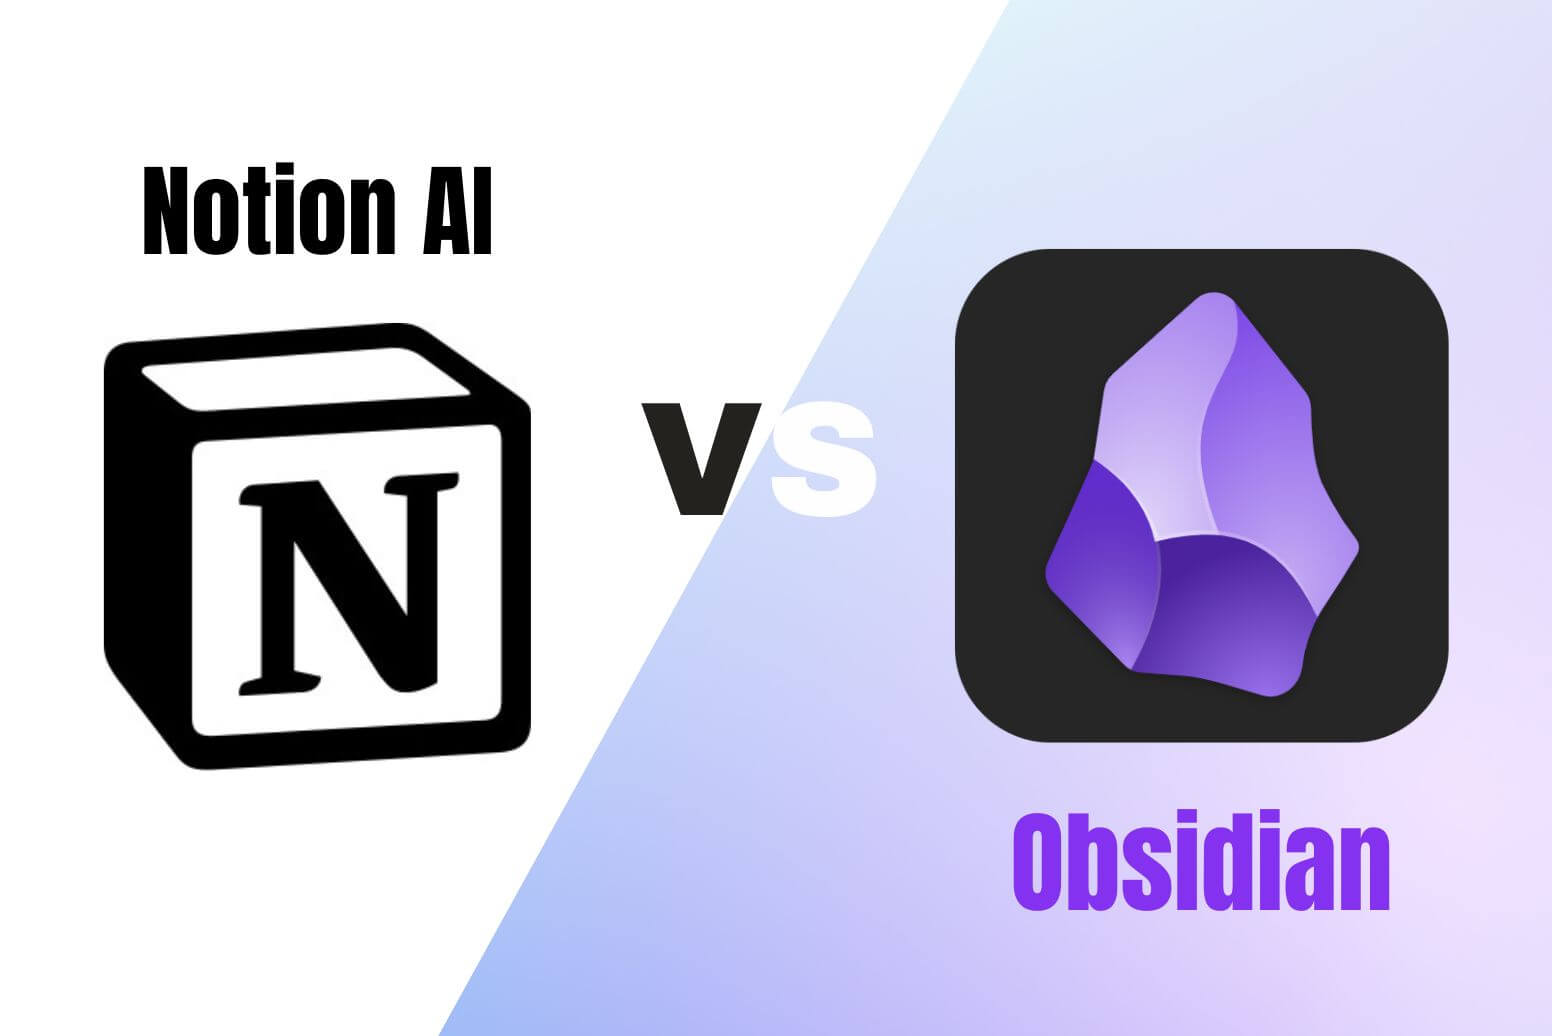 Obsidian vs Notion